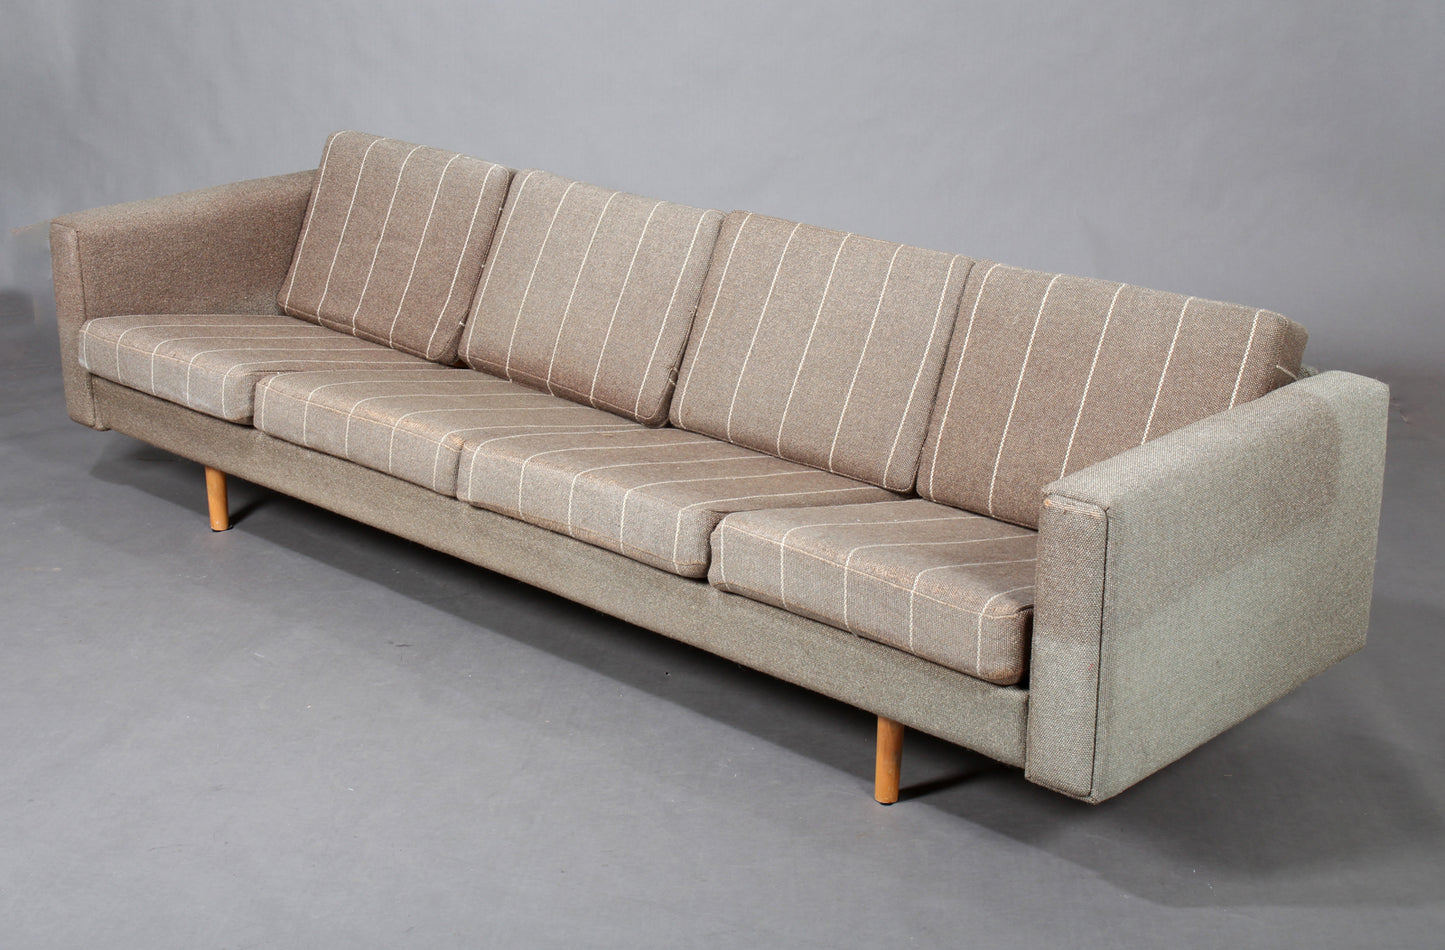 Hans J. Wegner 4 seat sofa model GE-300. To be restored.